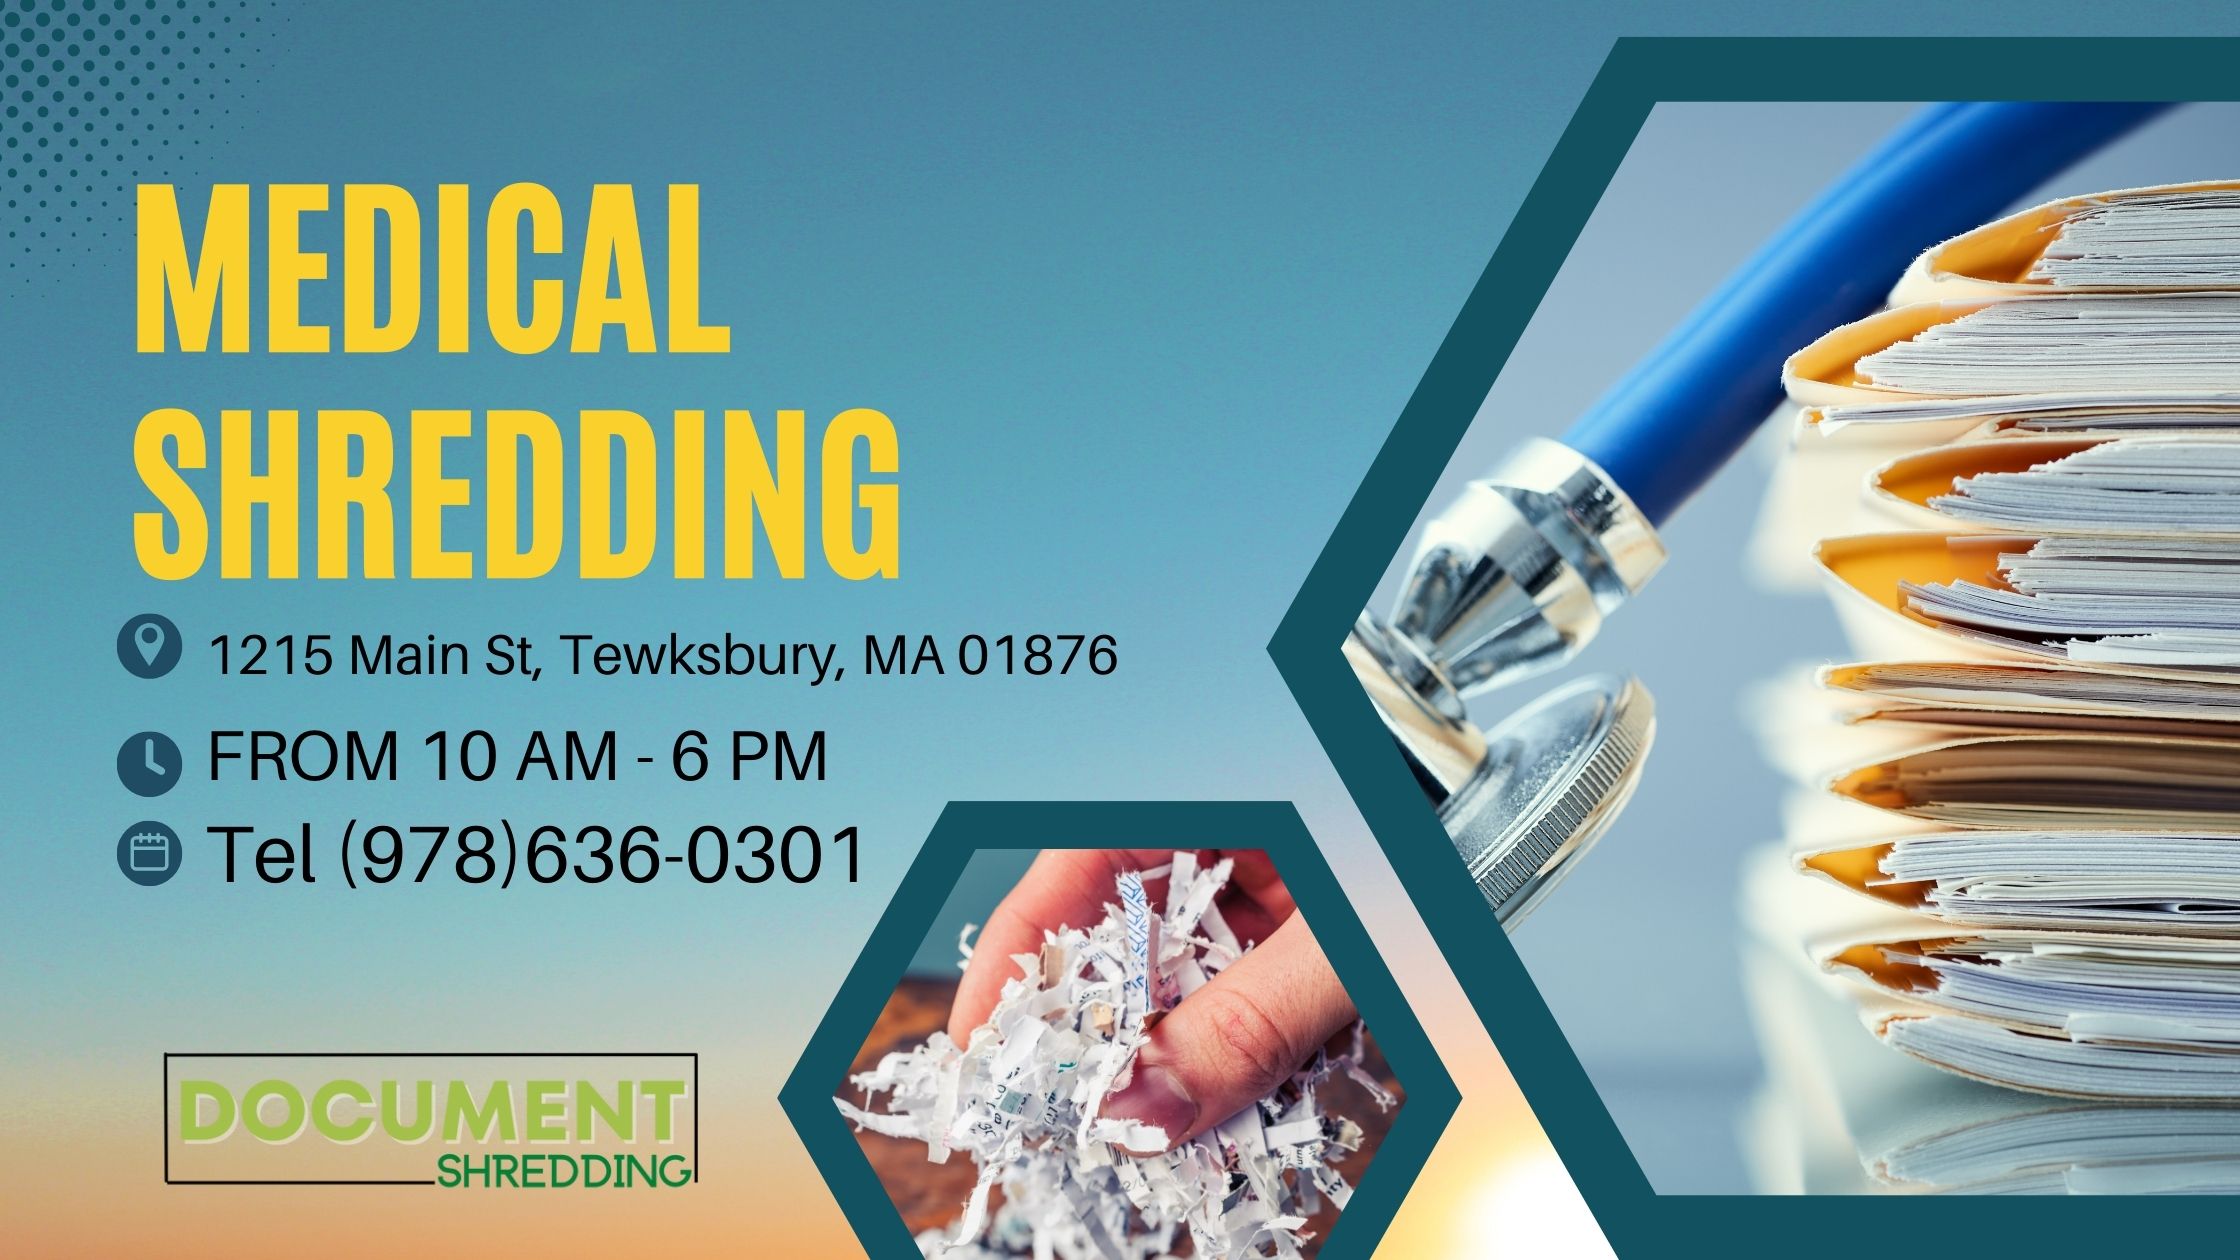 Medical Shredding Services In Portsmouth NH